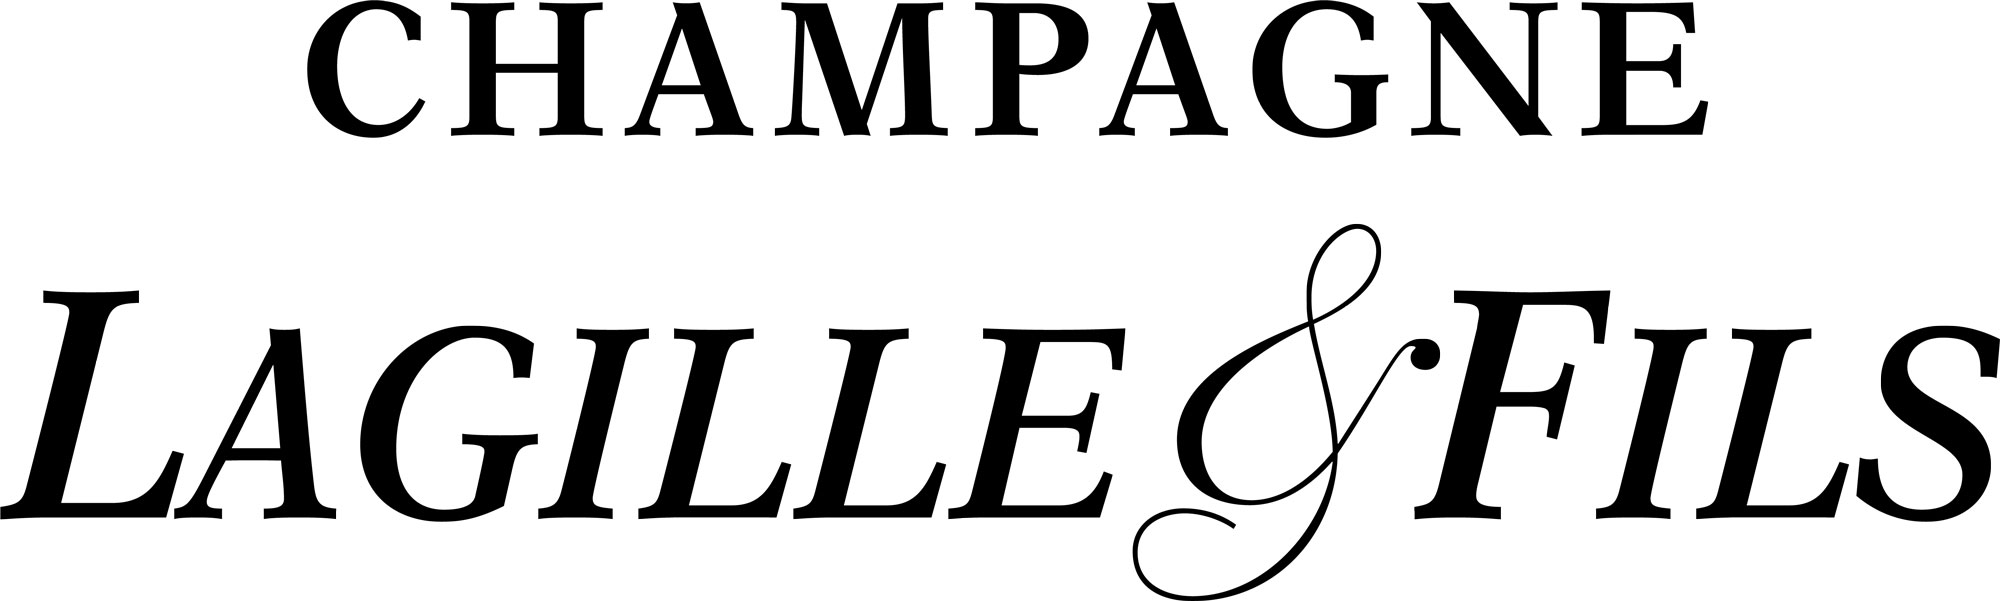 Champagne Lagille & Fils